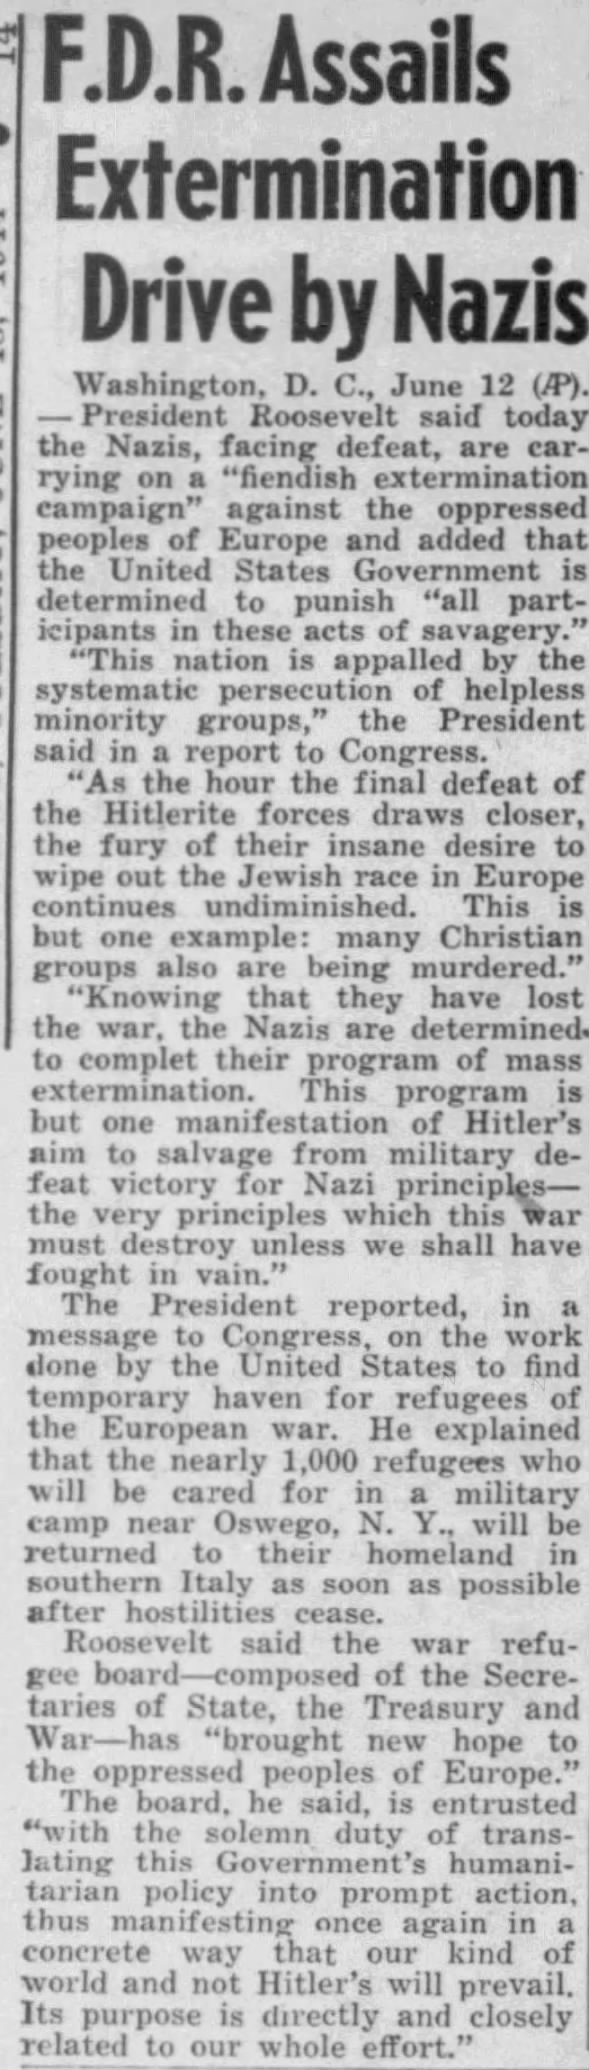 F.D.R. Assails Extermination Drive By Nazis